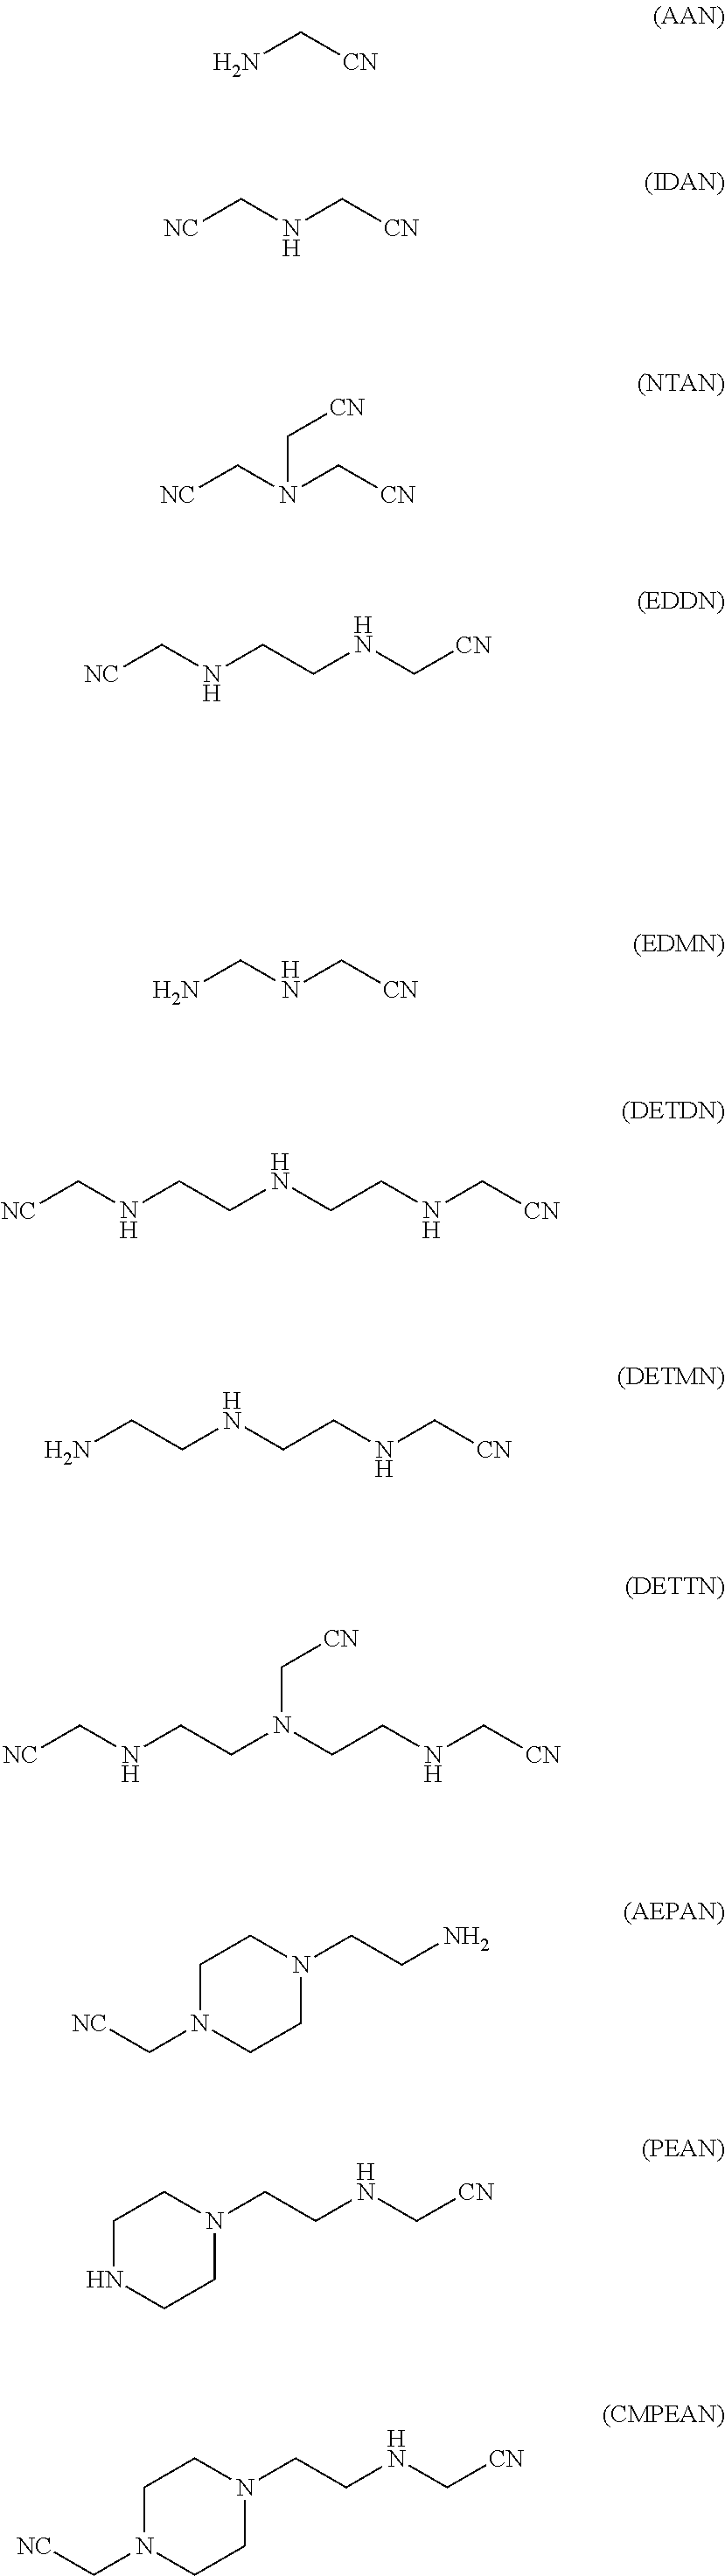 Production method for ethyleneamine mixtures